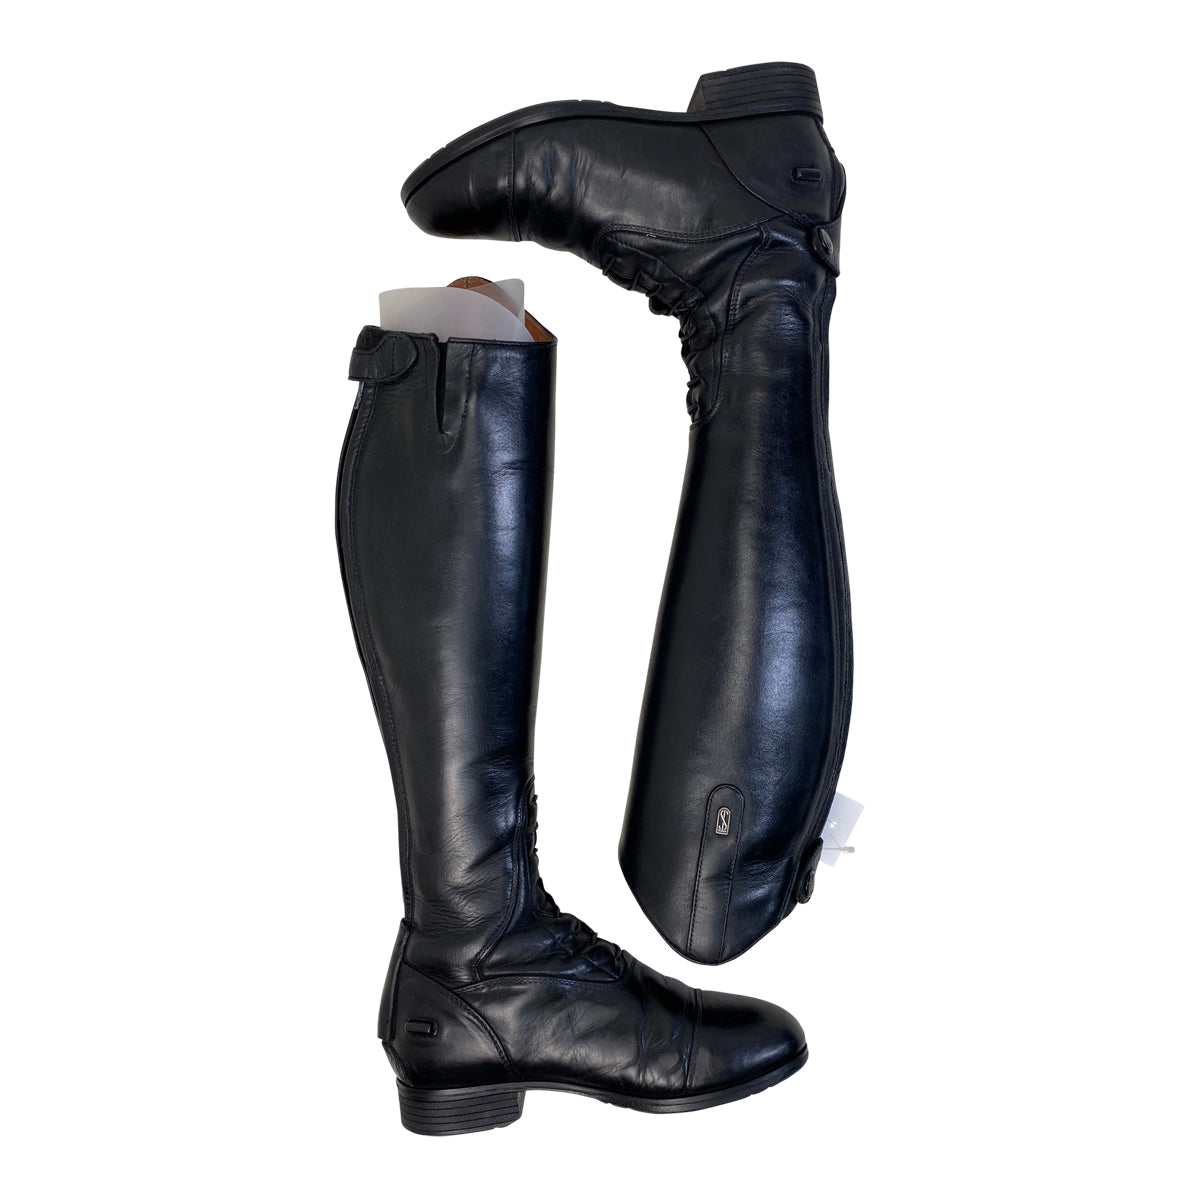 Tredstep 'Donatello' Field Boots in Black